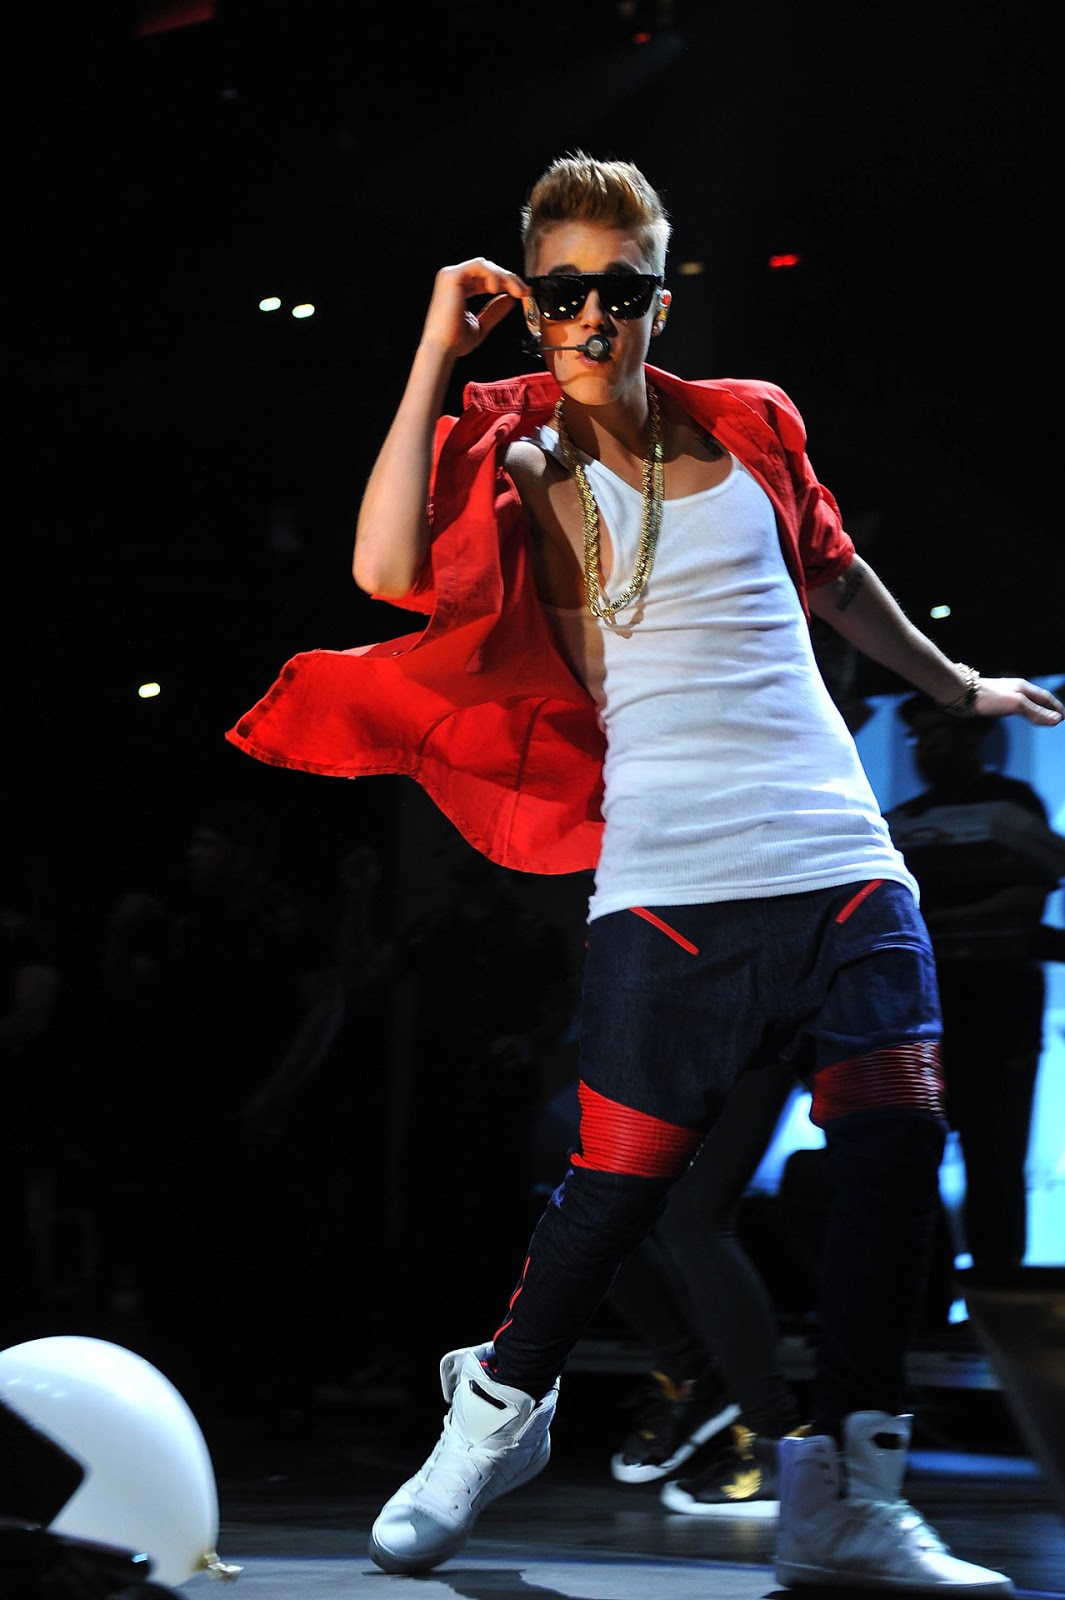 Bieber Exclusive: Justin Bieber's New Performance Z100 Jingle Ball 20121065 x 1600